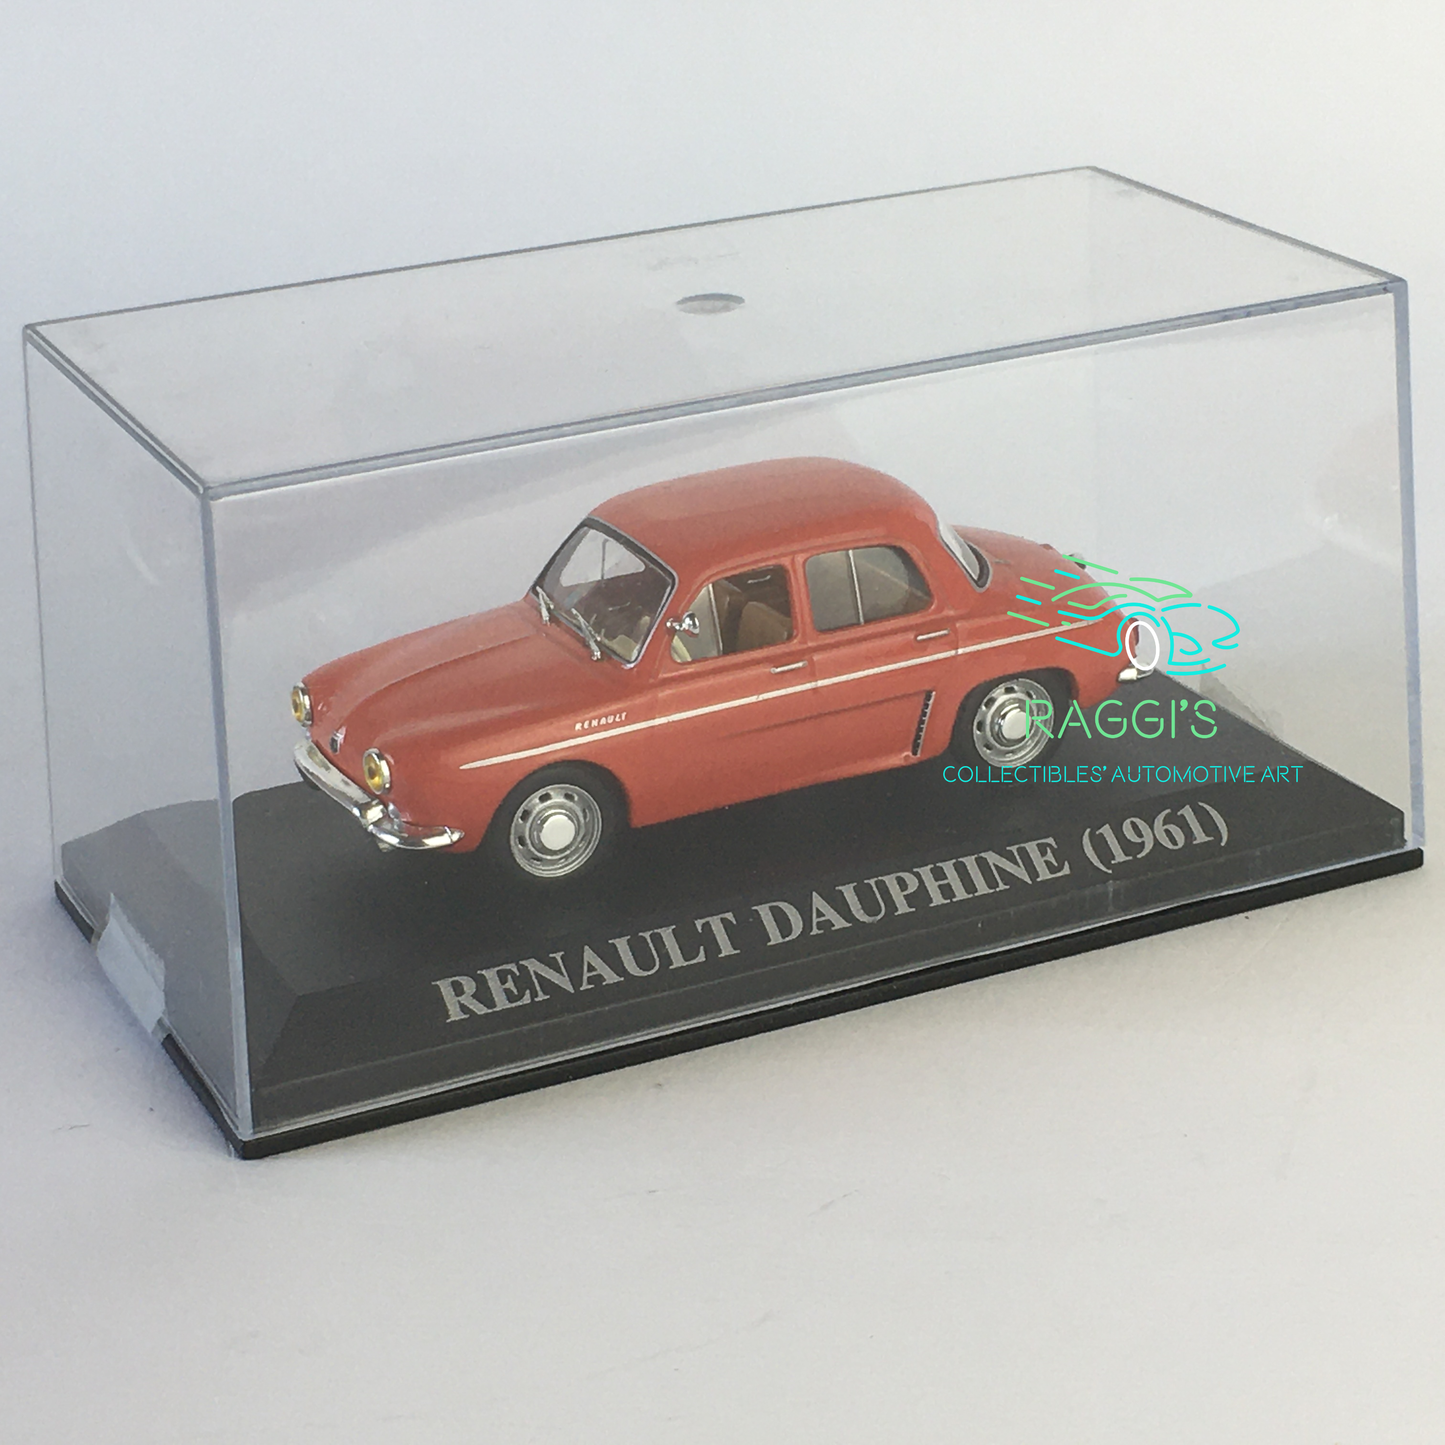 Renault, Modellino in Metallo Pressofuso Renault Dauphine 1961 Scala 1:43 - Raggi's Collectibles' Automotive Art